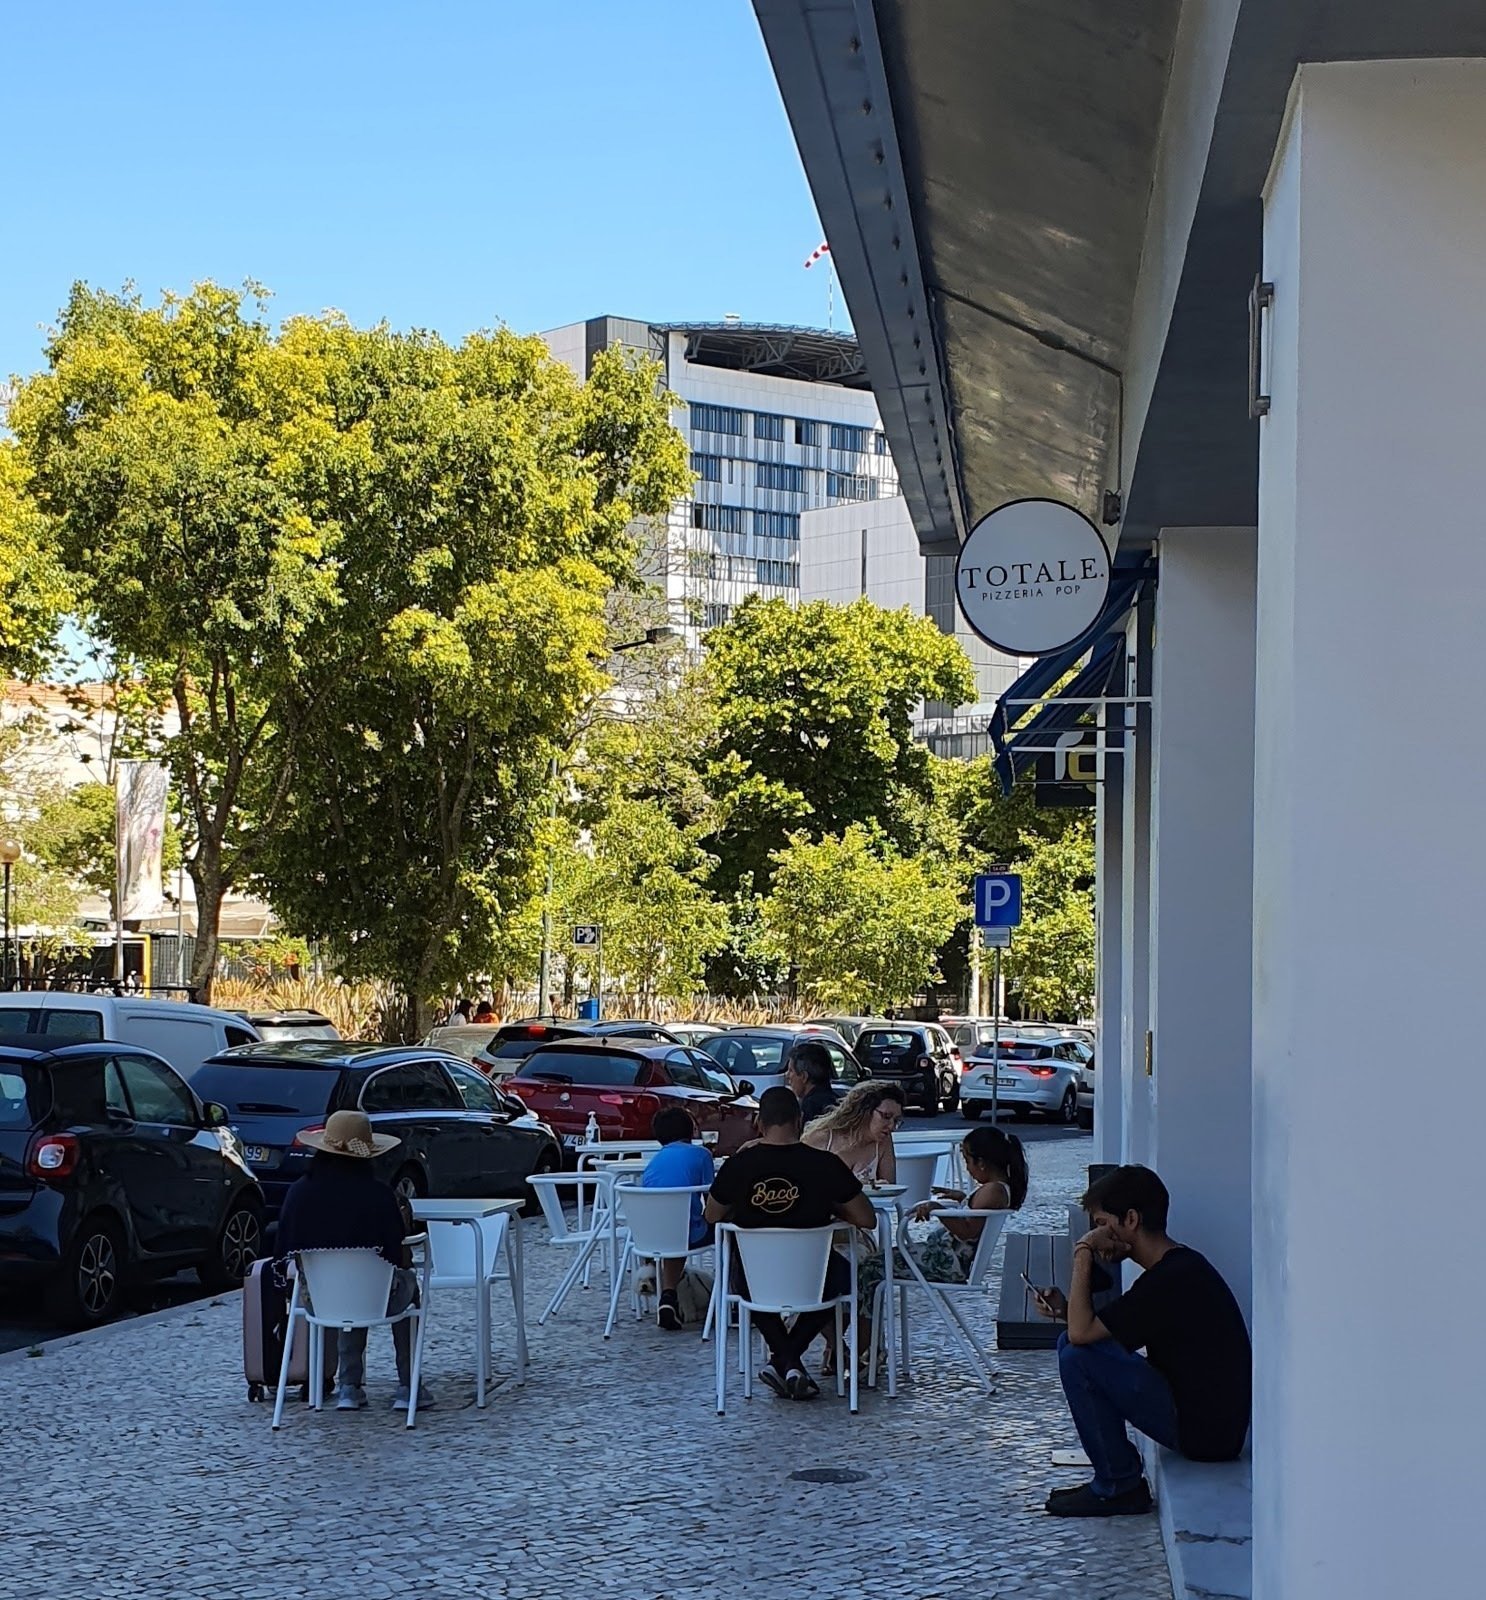 TOTALE PIZZERIA POP: A Work-Friendly Place in Lisbon